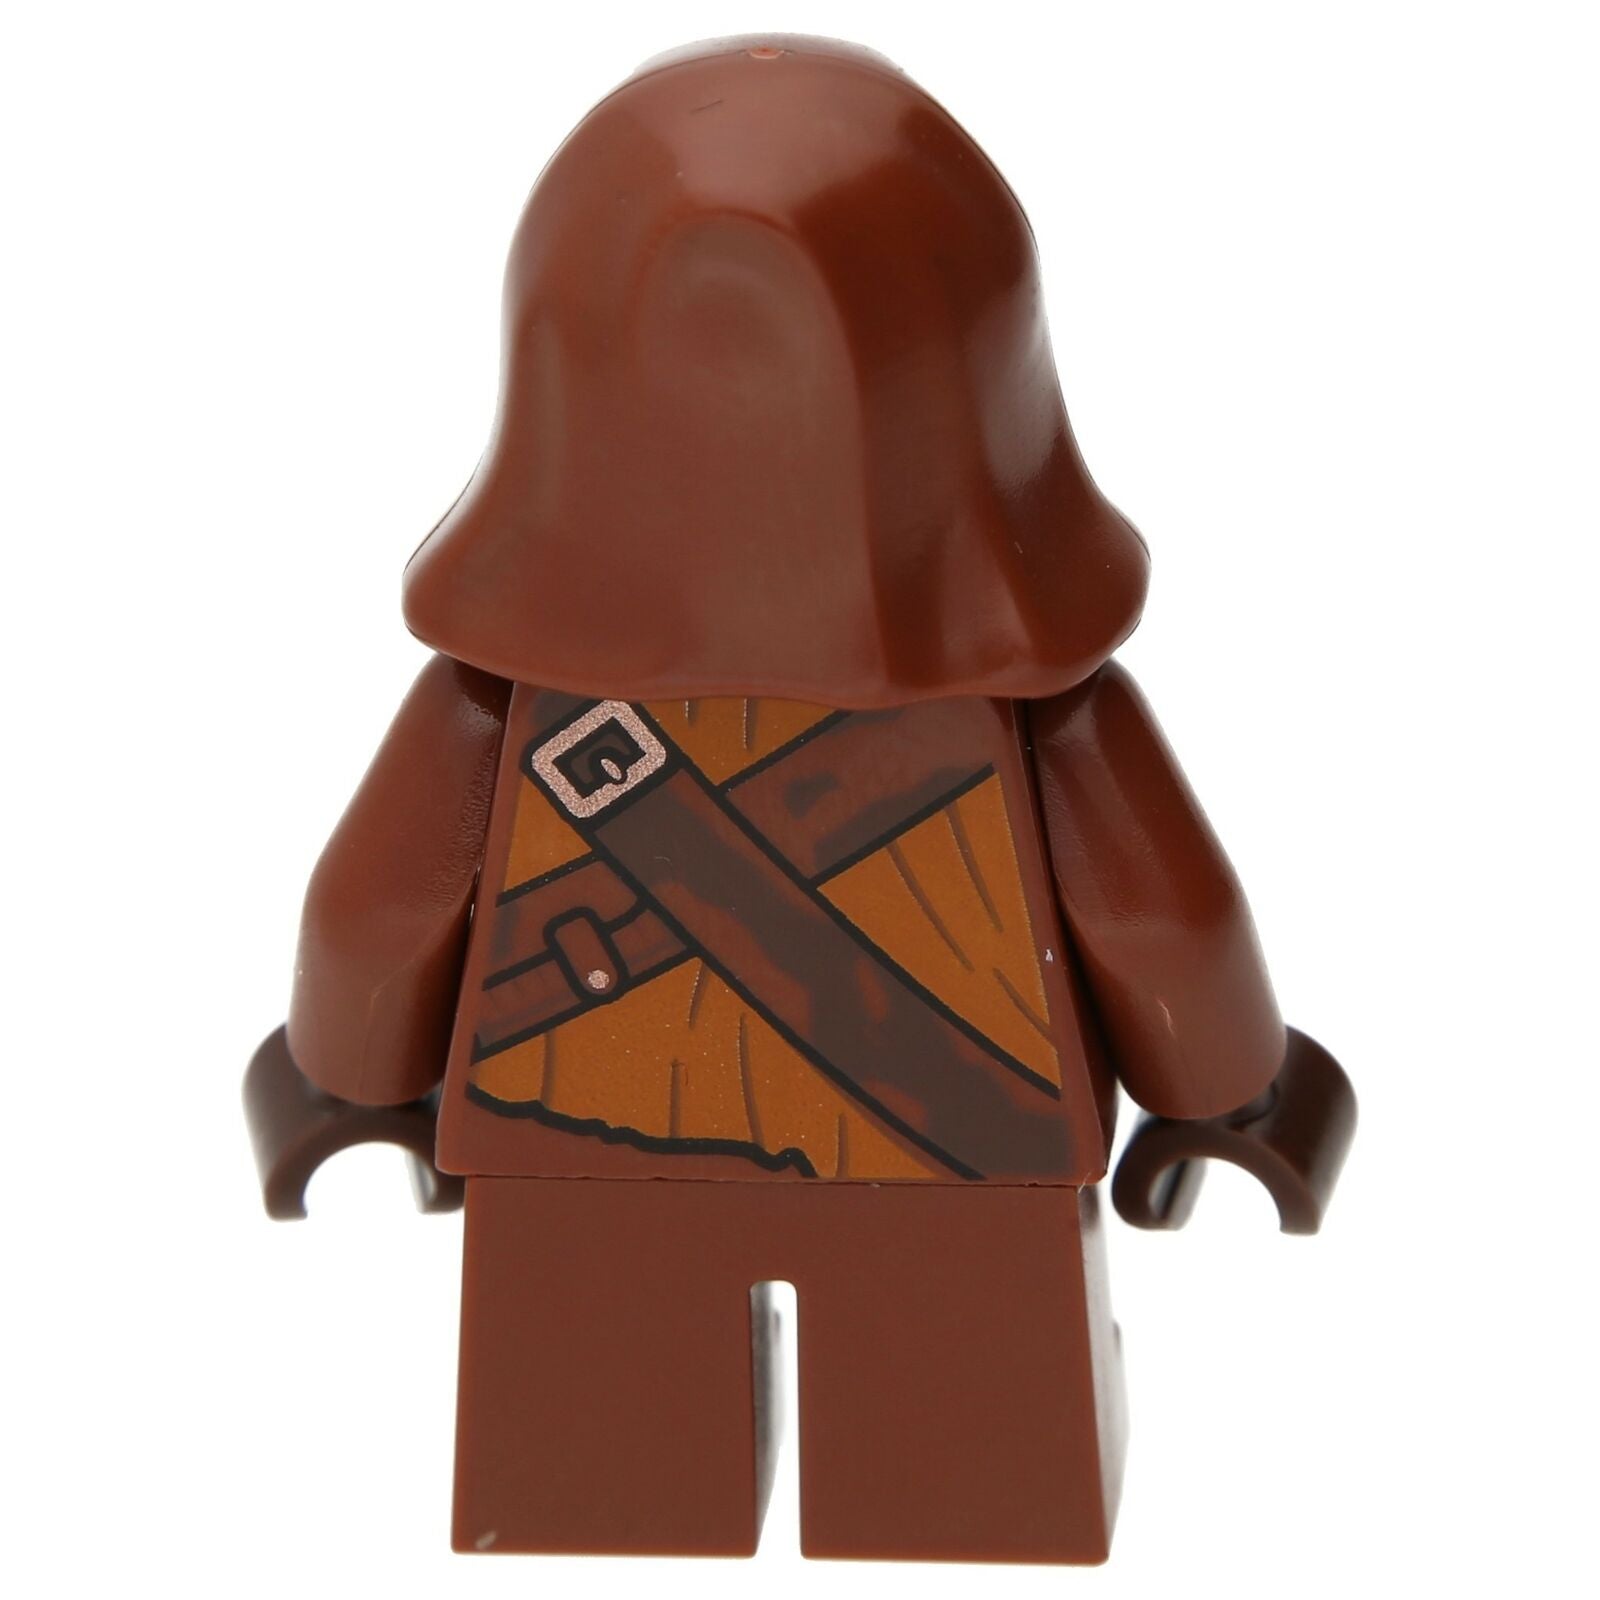 LEGO Star Wars Minifigur - Jawa (zerfetztes Shirt)